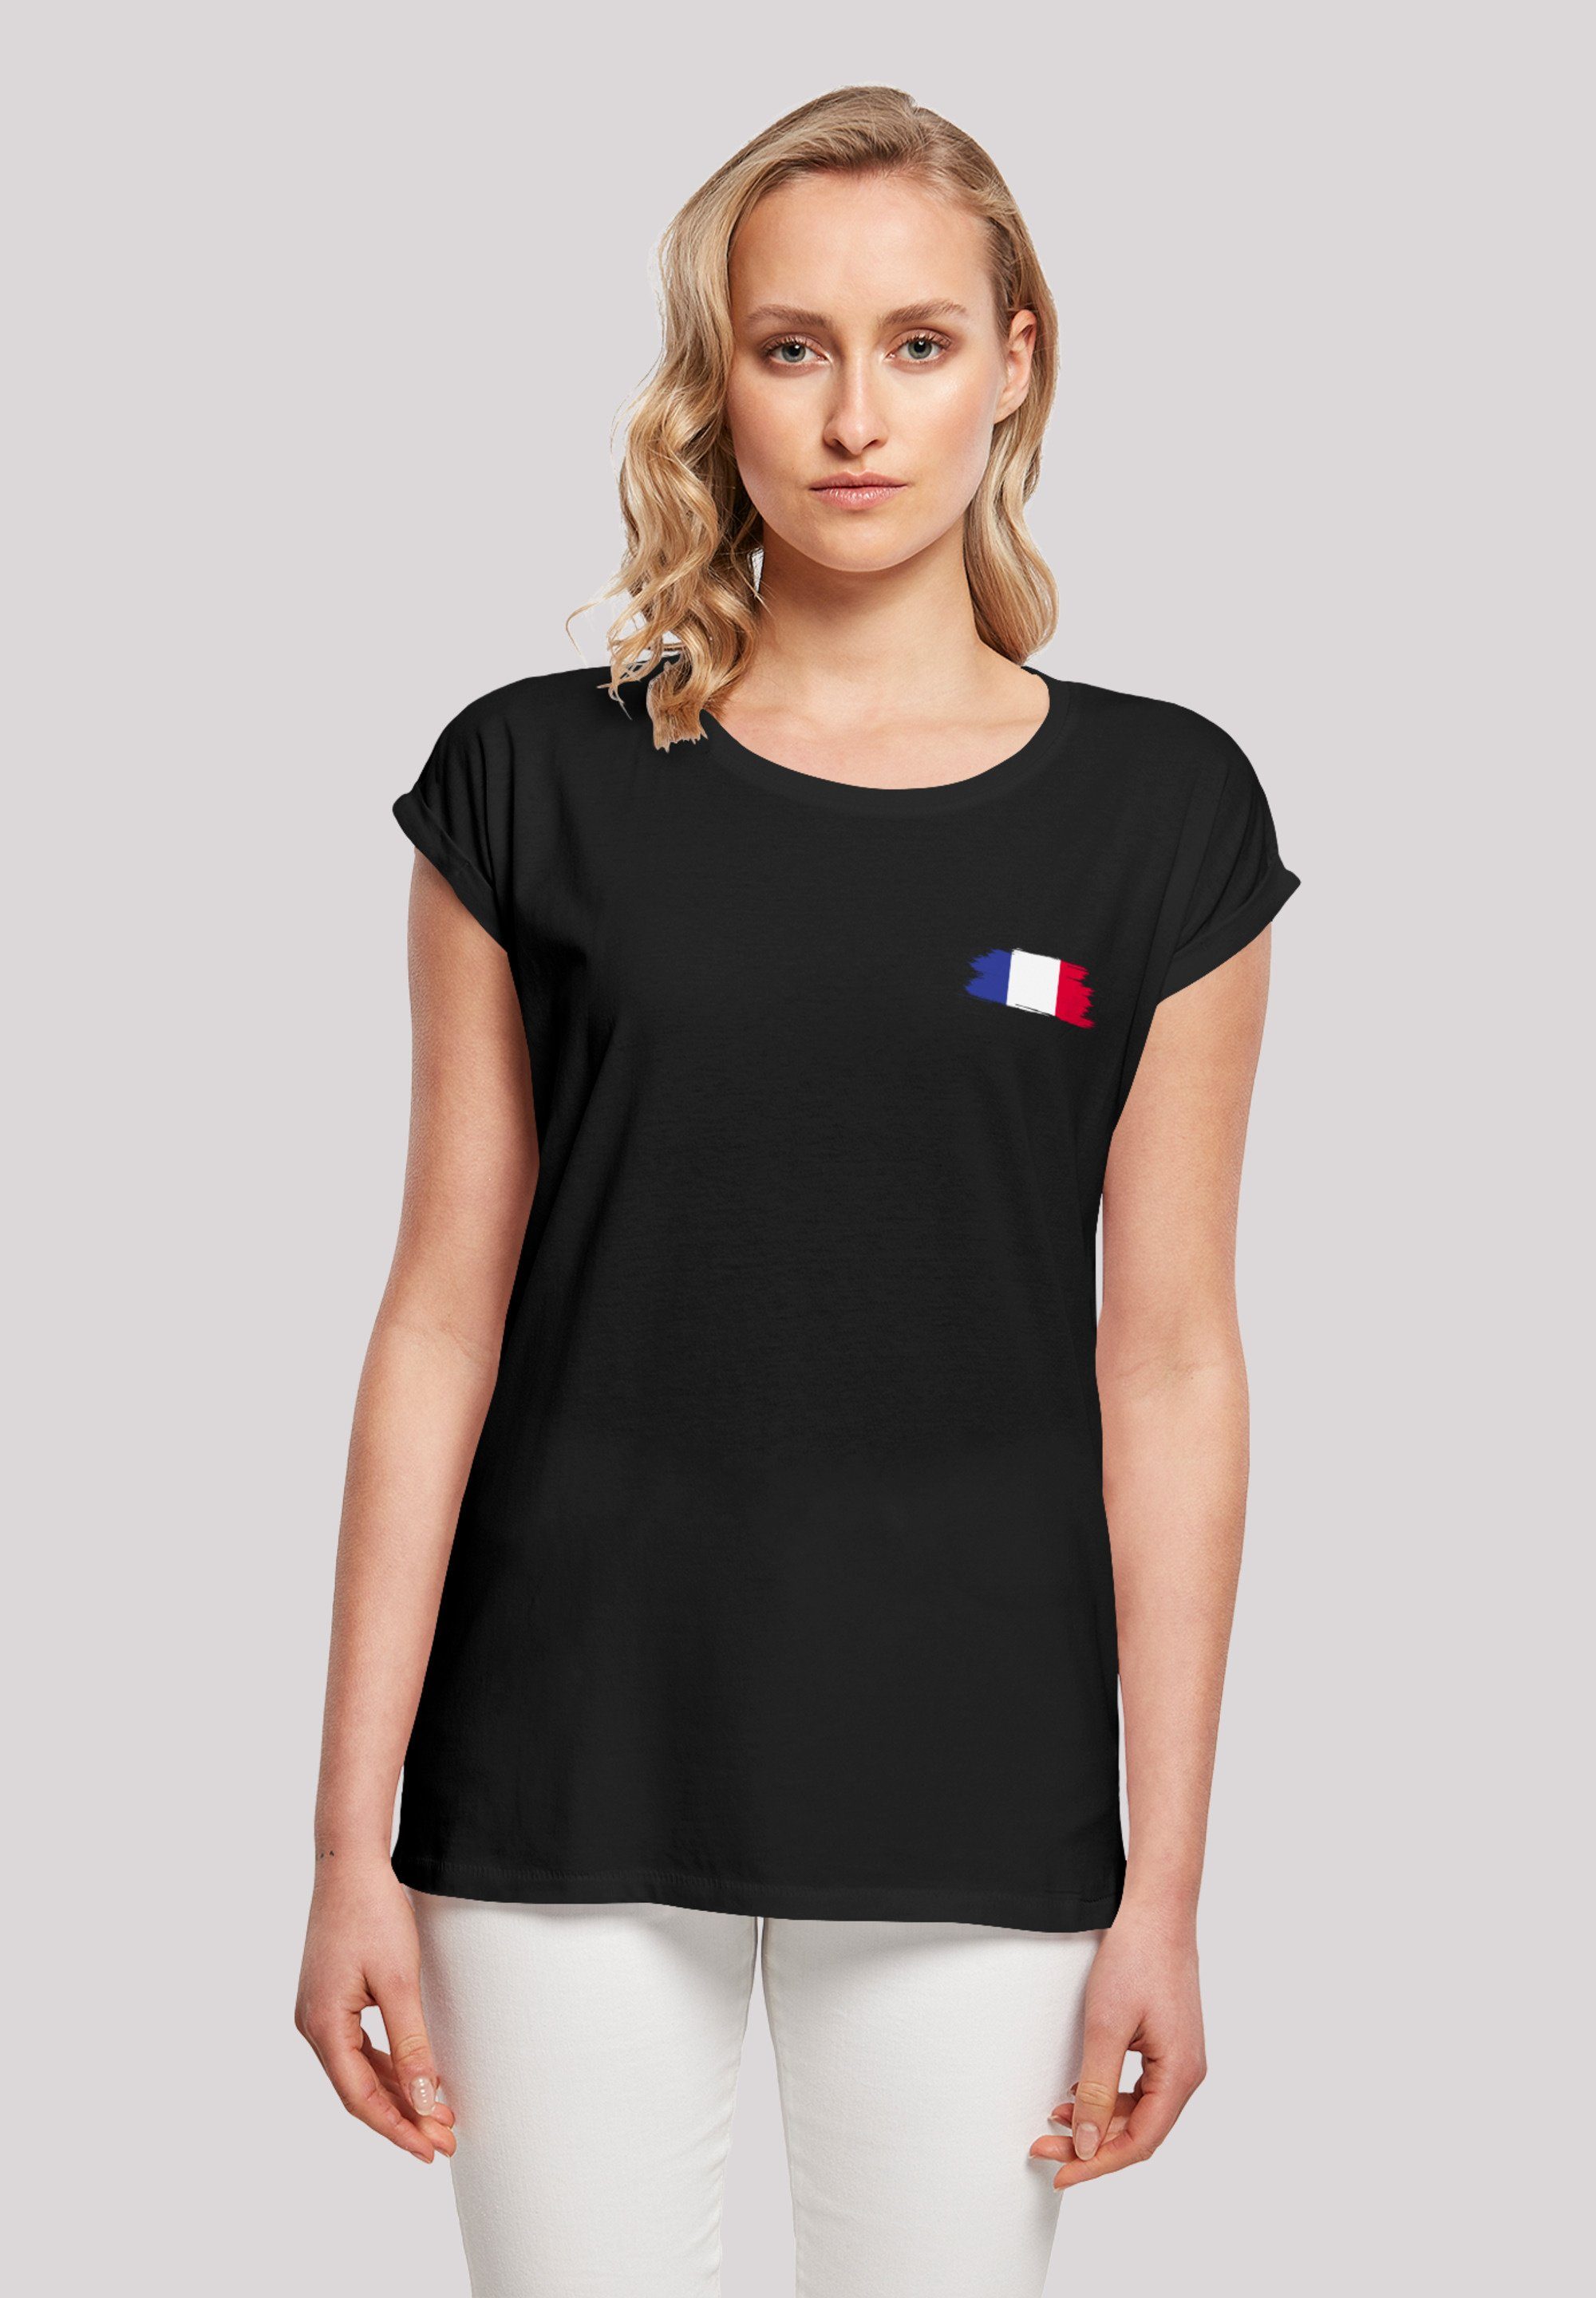 F4NT4STIC T-Shirt France Frankreich Größe und cm 170 Fahne trägt Das M ist groß Print, Flagge Model